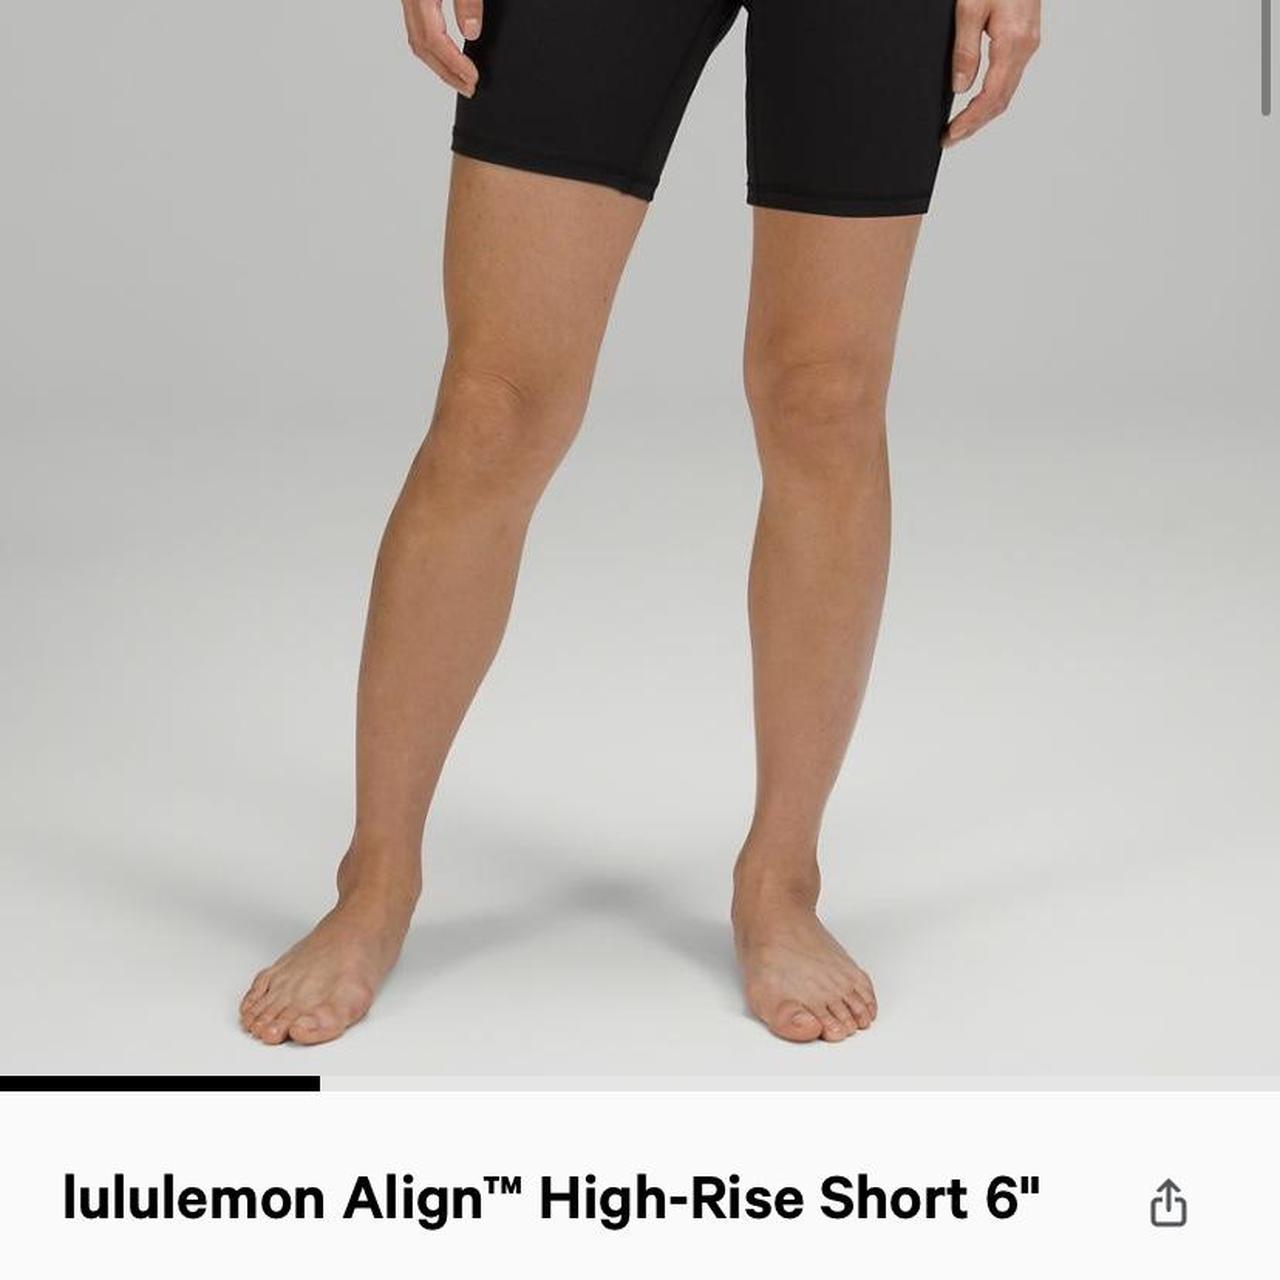 Align high-rise shorts - 6